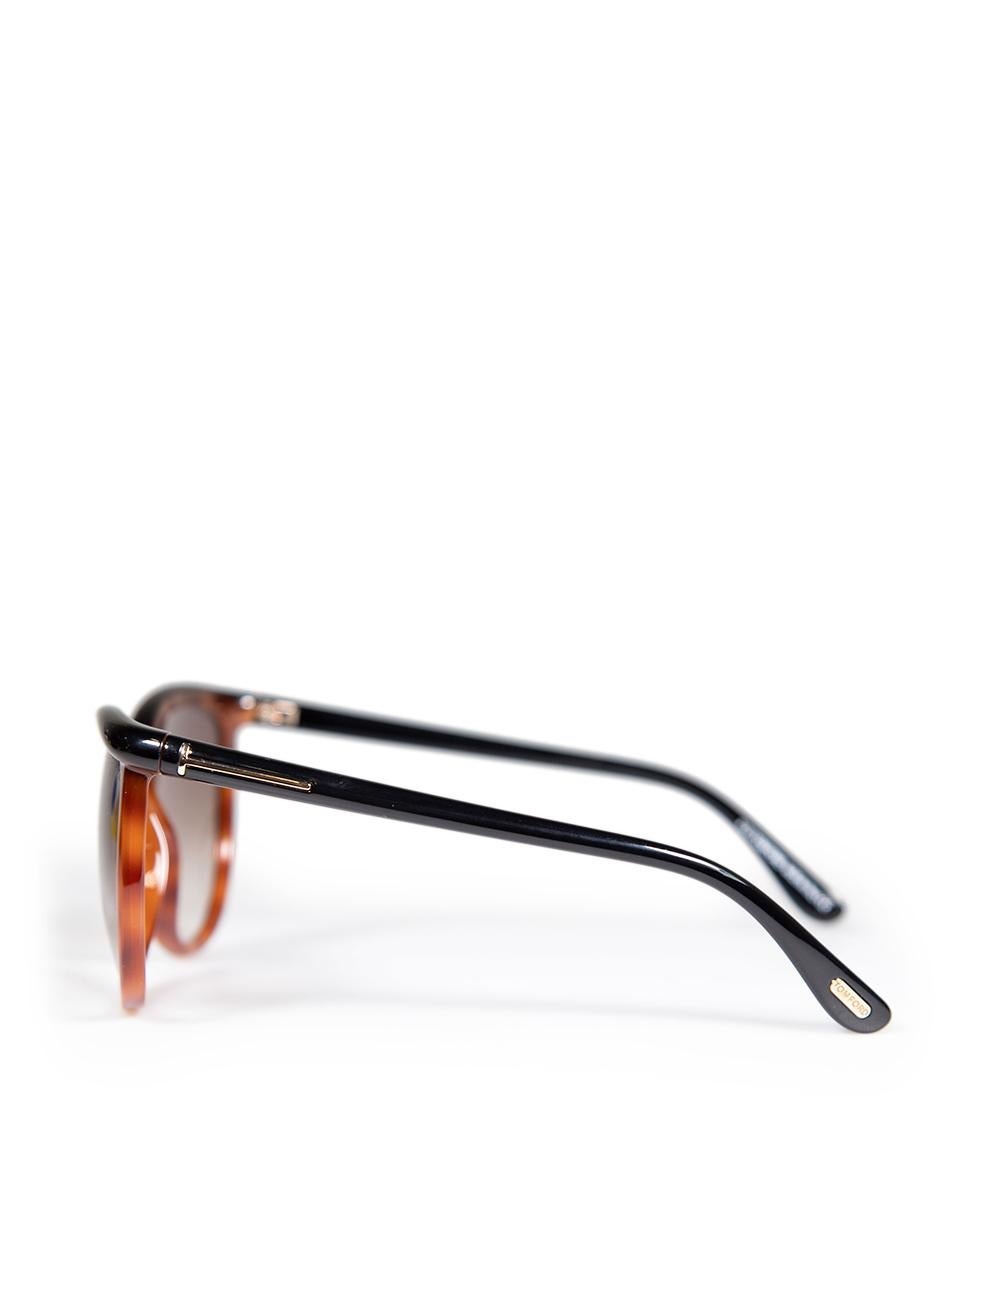 Tom Ford Black Havana Josephine Sunglasses For Sale 1